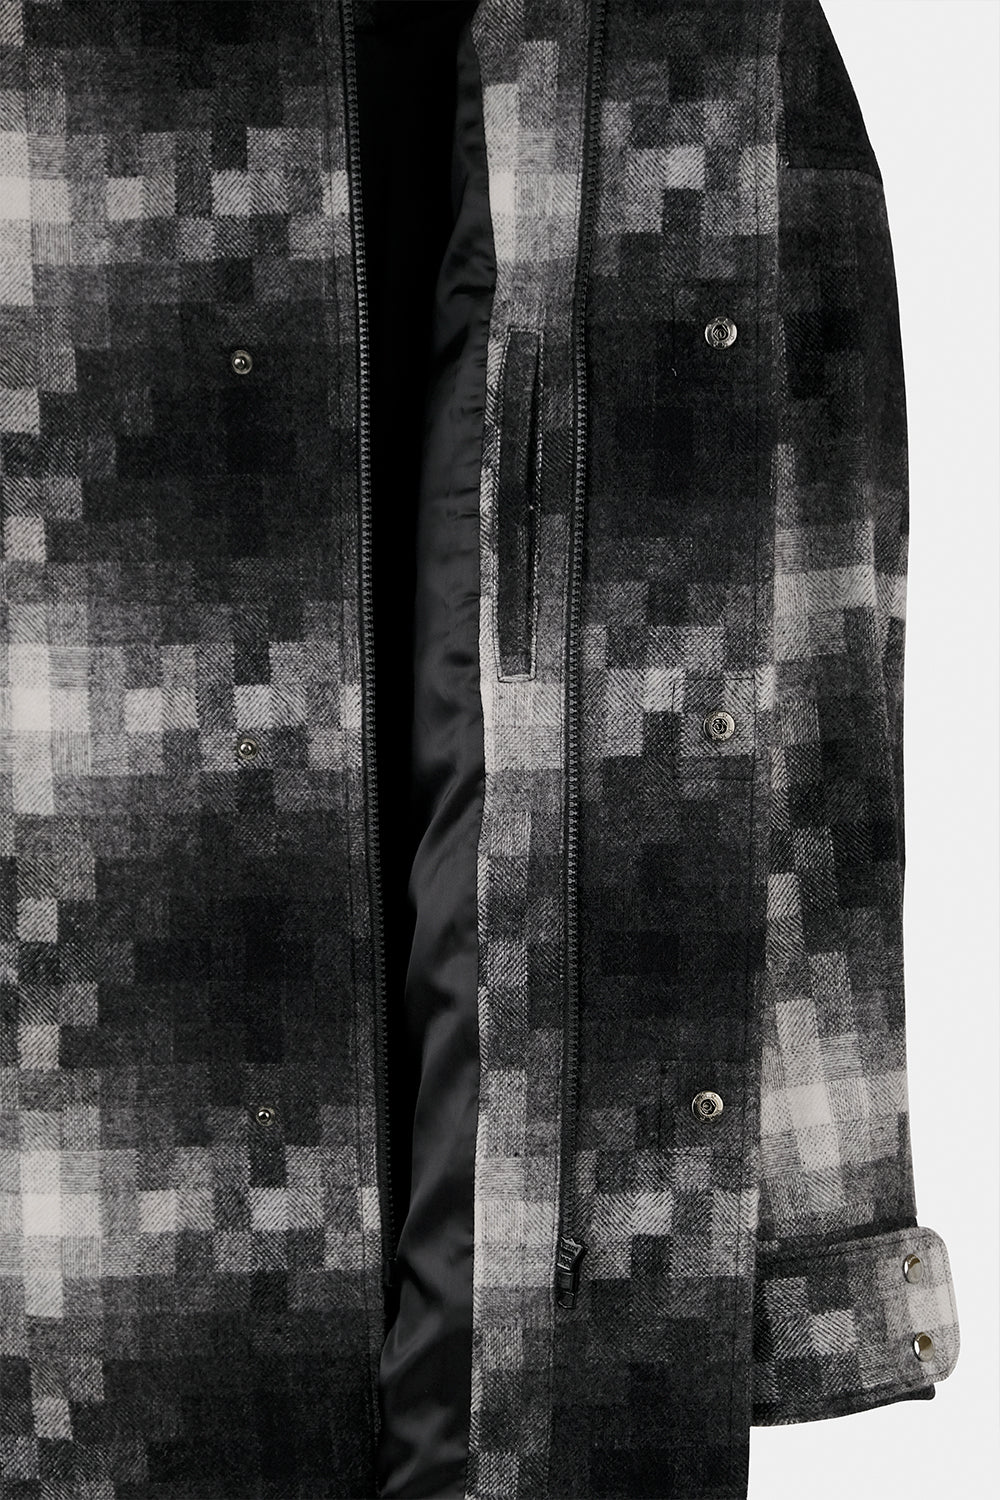 SEANNUNG - MEN - Plaid Pattern Wool Locomotivee Jacket 格紋毛料騎士夾克